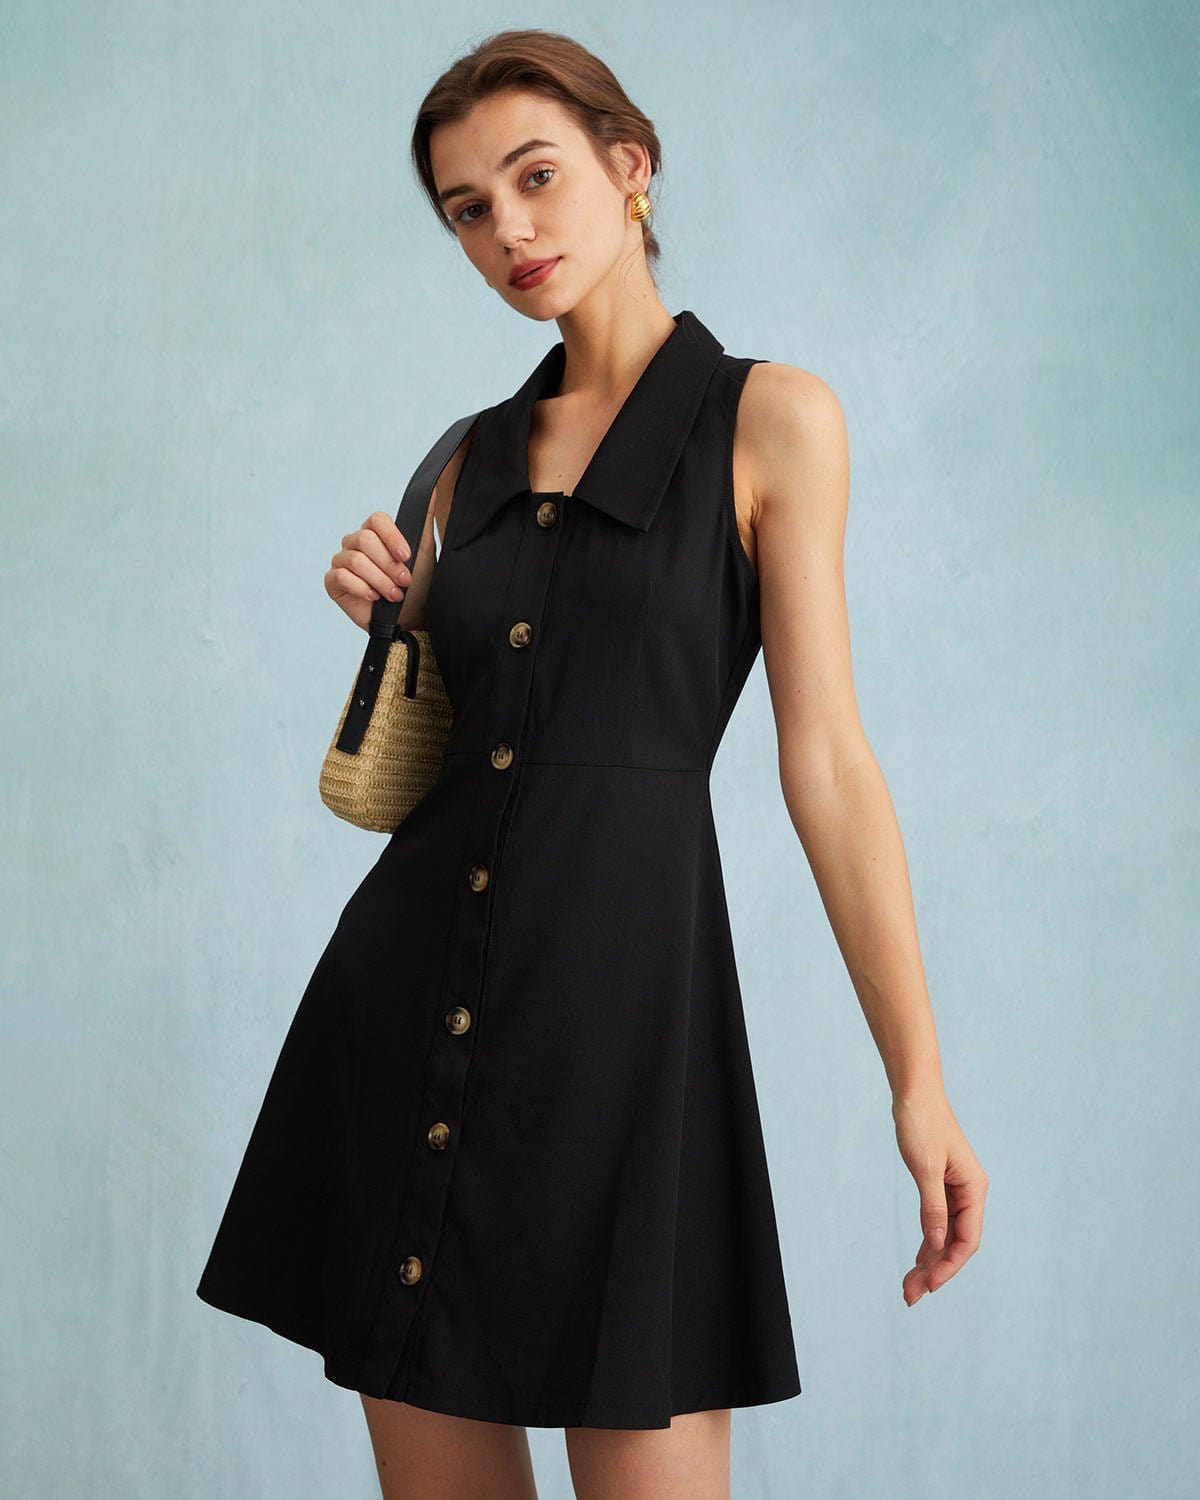 The Black Collared Sleeveless A Line Shirt Mini Dress